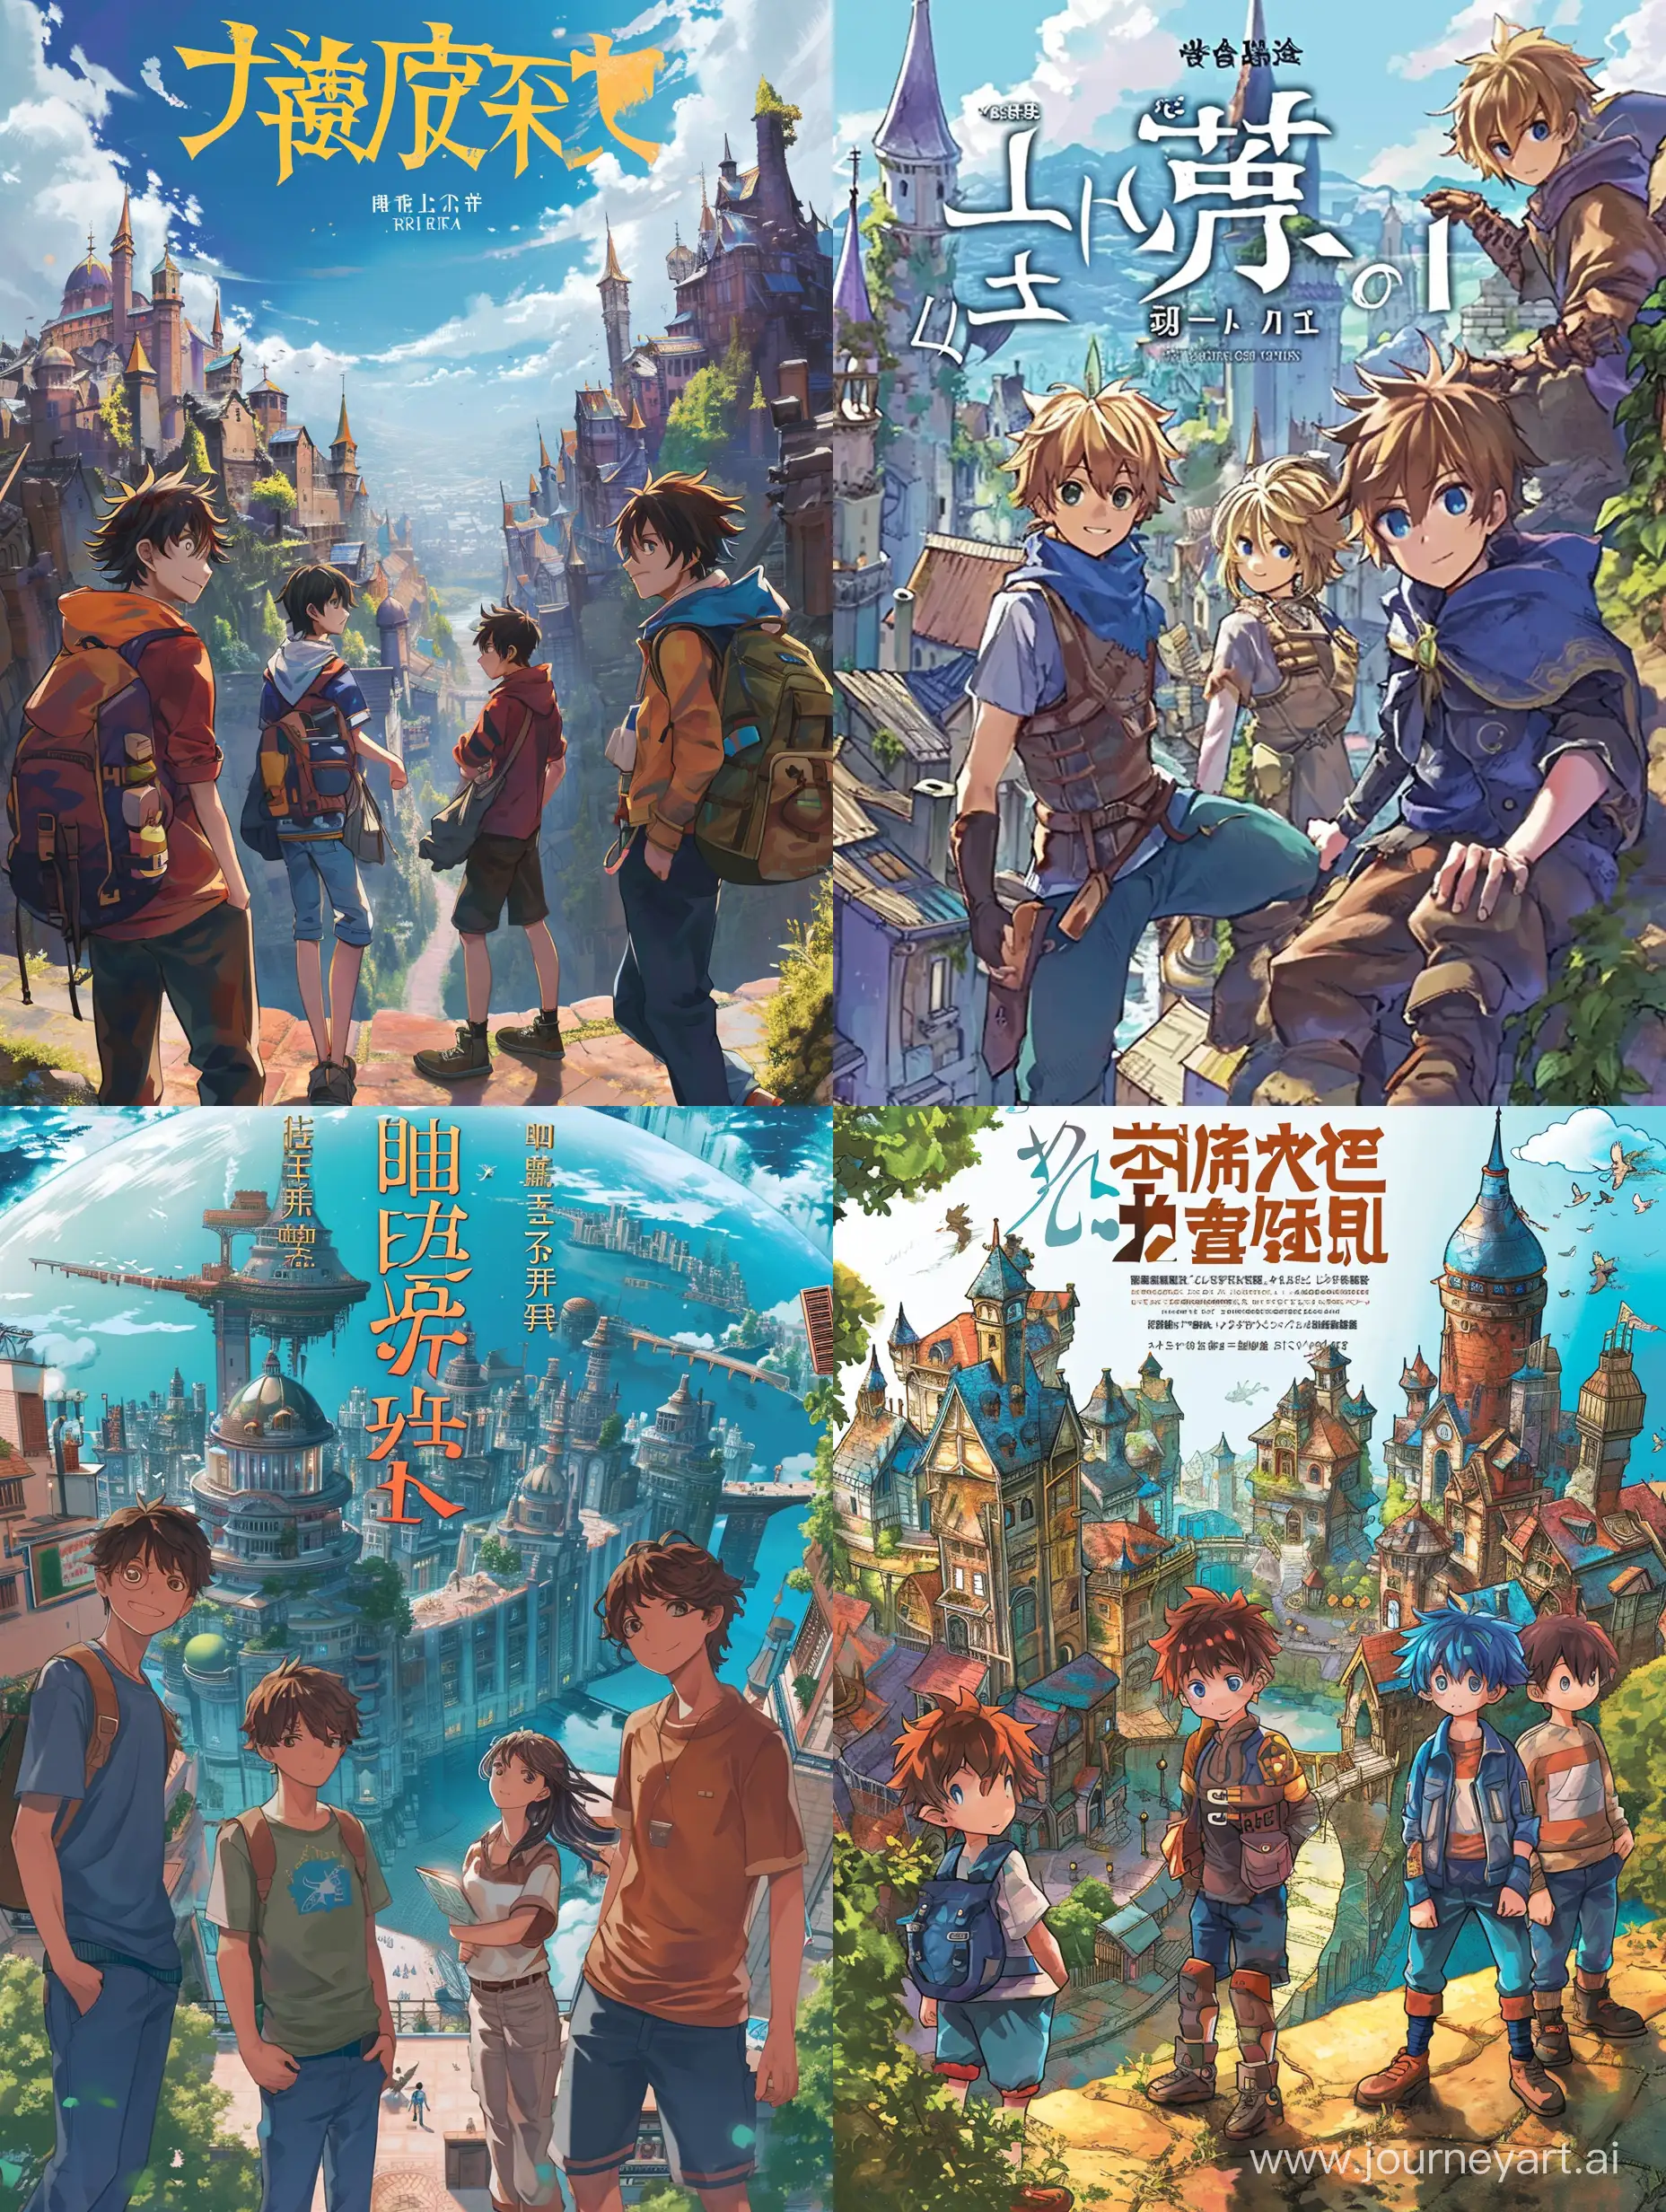 Fantasy-City-Adventure-Three-Boys-and-One-Girl-Explore-a-Magical-World